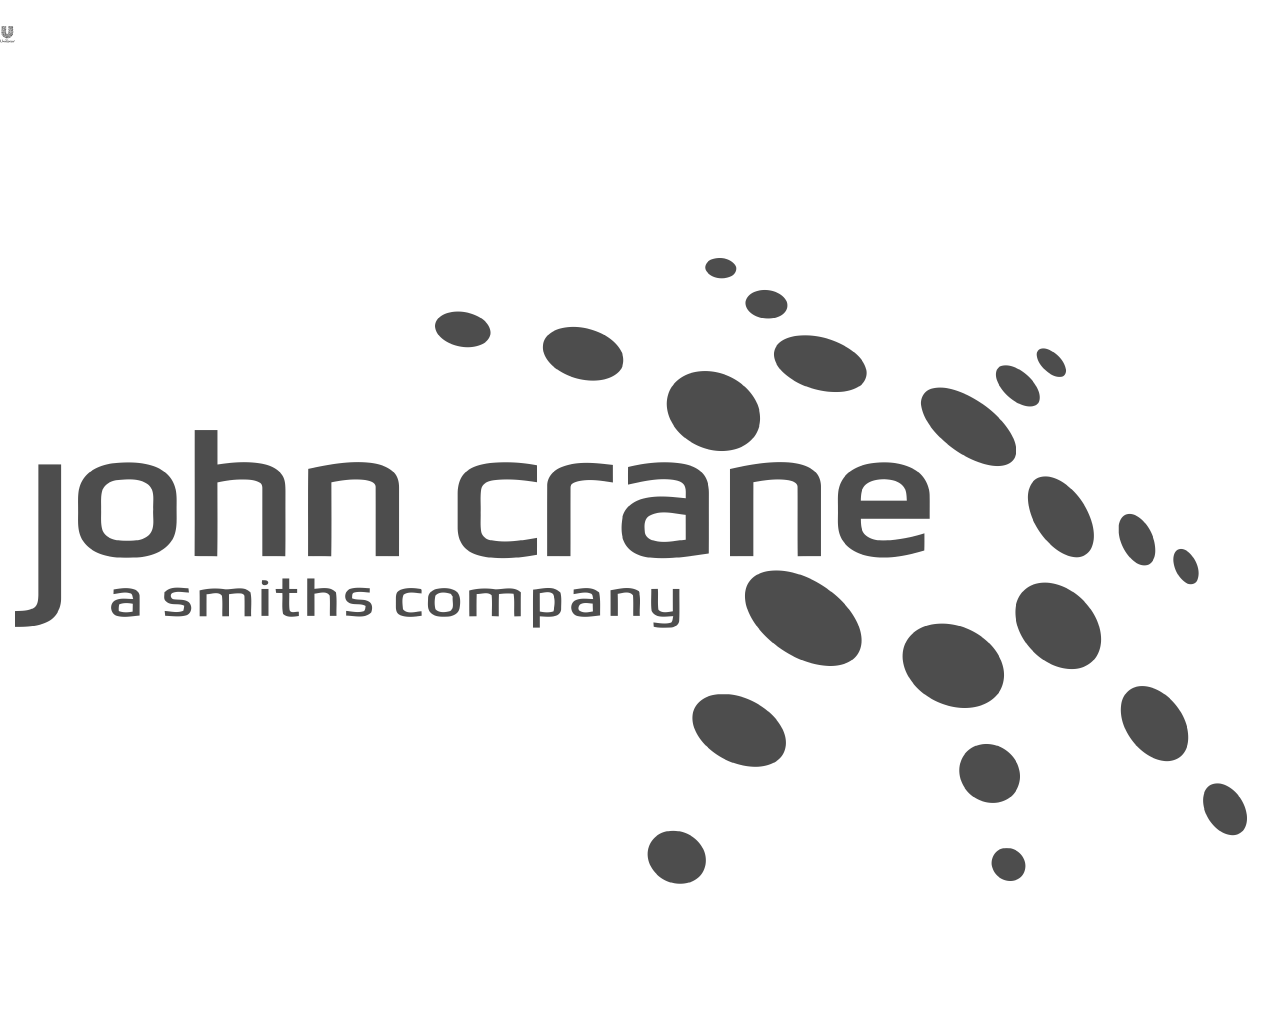 John Crane logo